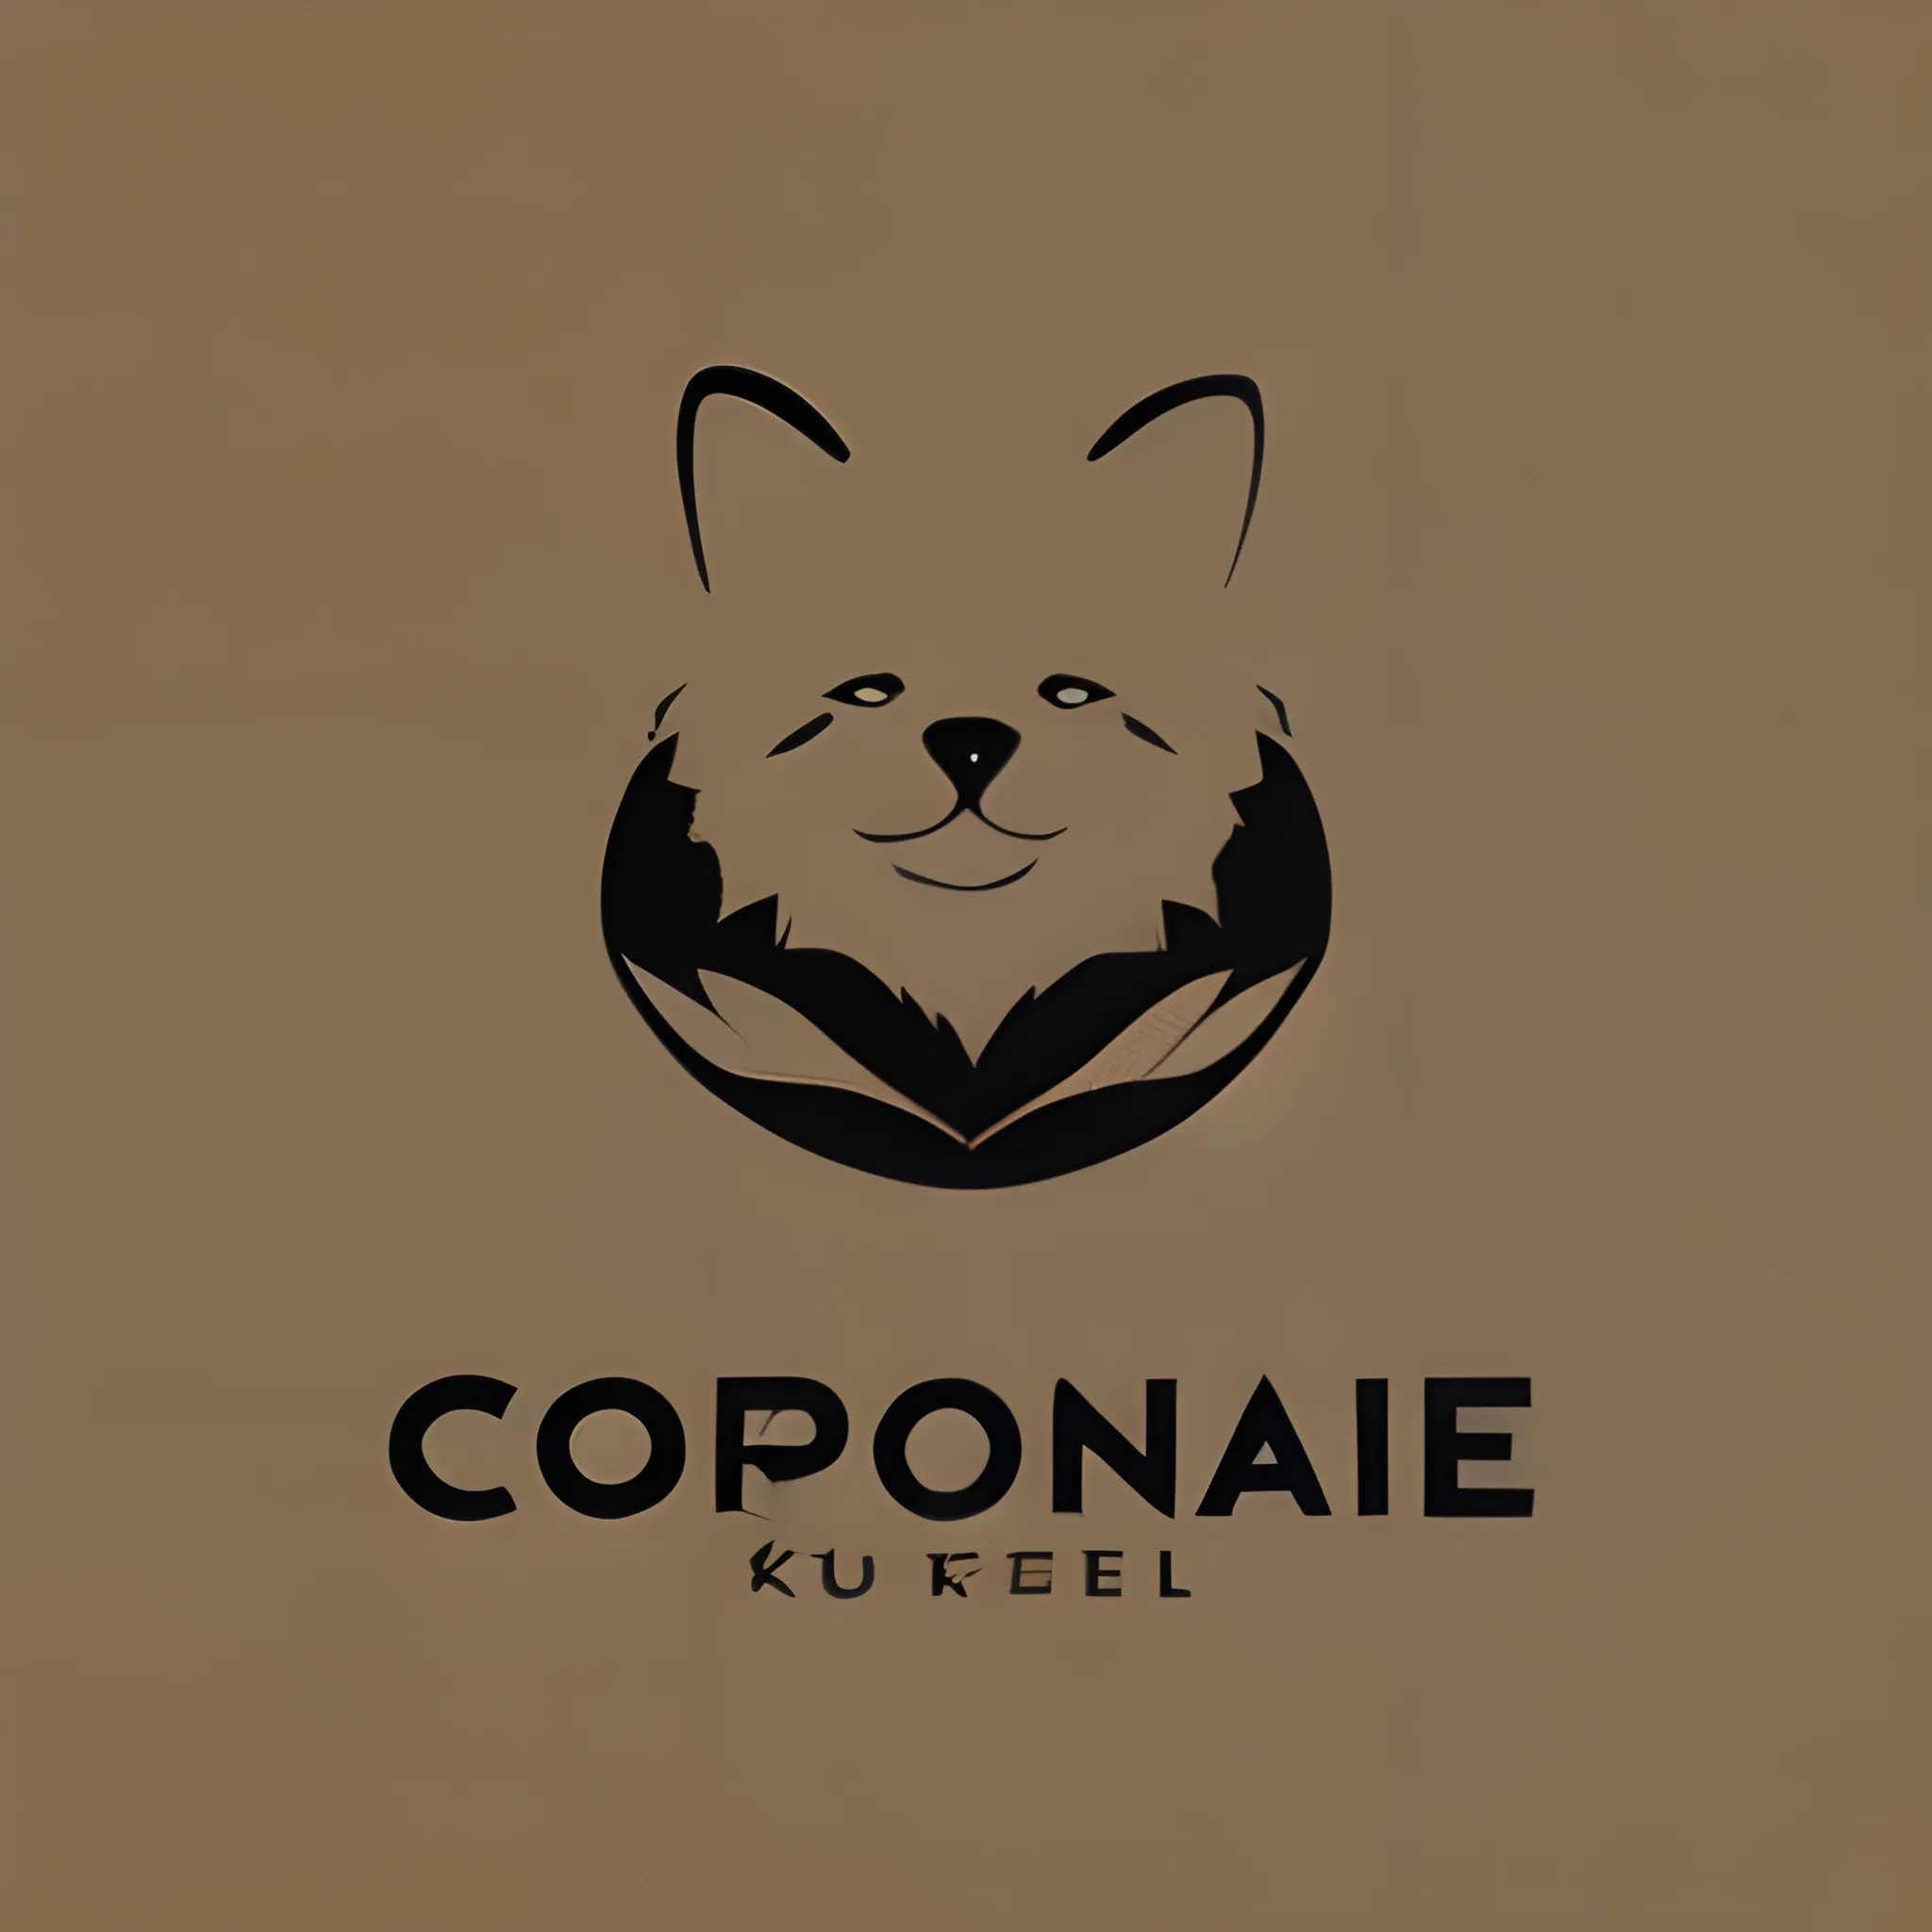 Corporate logo for fur